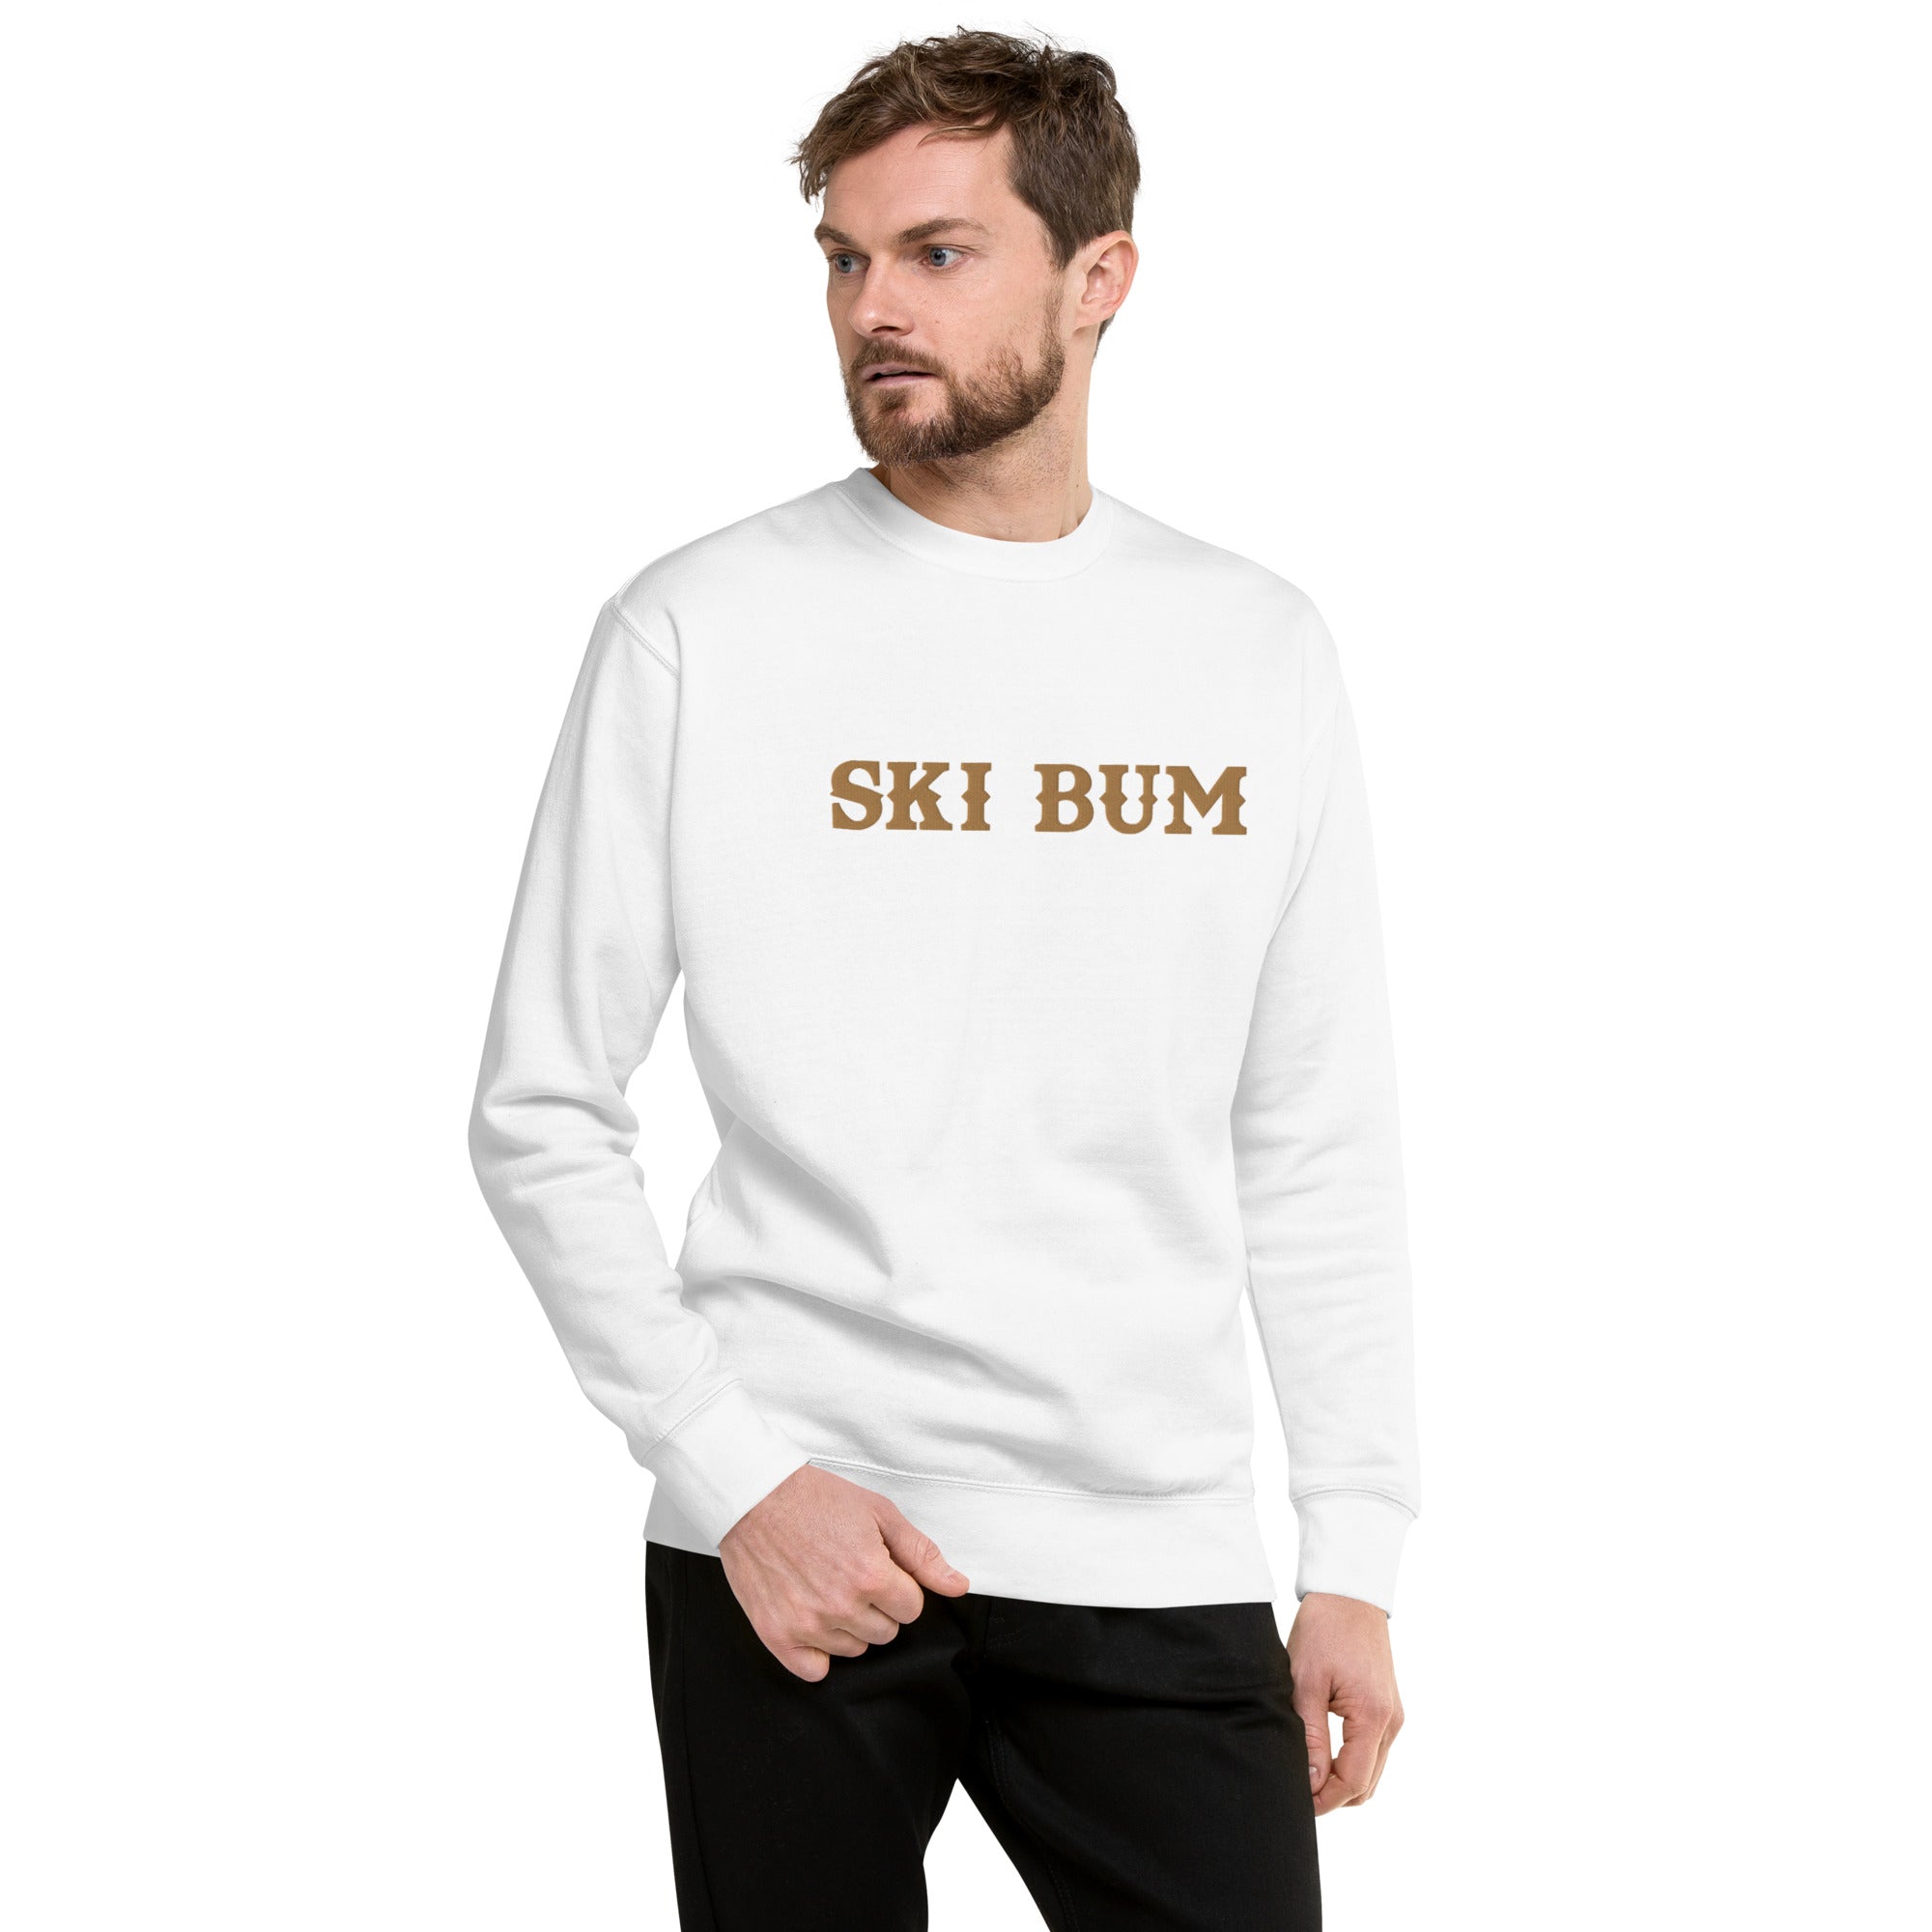 Unisex Premium Sweatshirt Ski Bum Old Gold large embroidered pattern